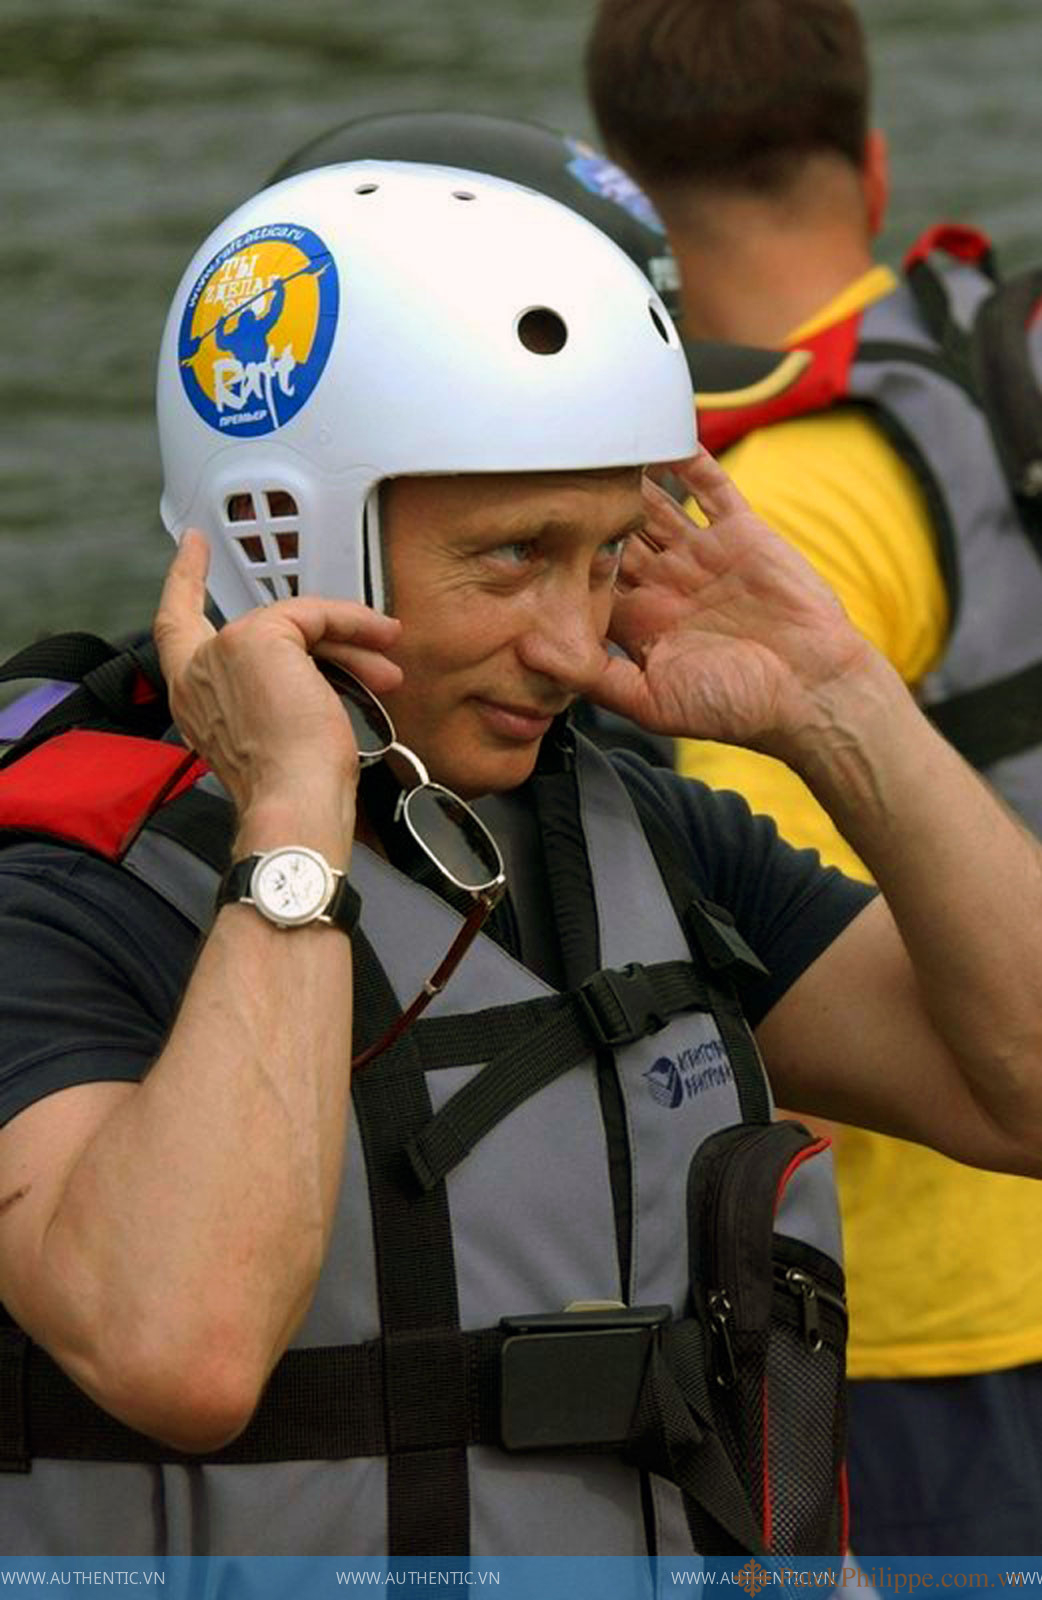 Vladimir-Putin-River-Rafting-with-Patek-Philippe-Moonphase-Perpetual-Calender-Reference-5039.jpeg